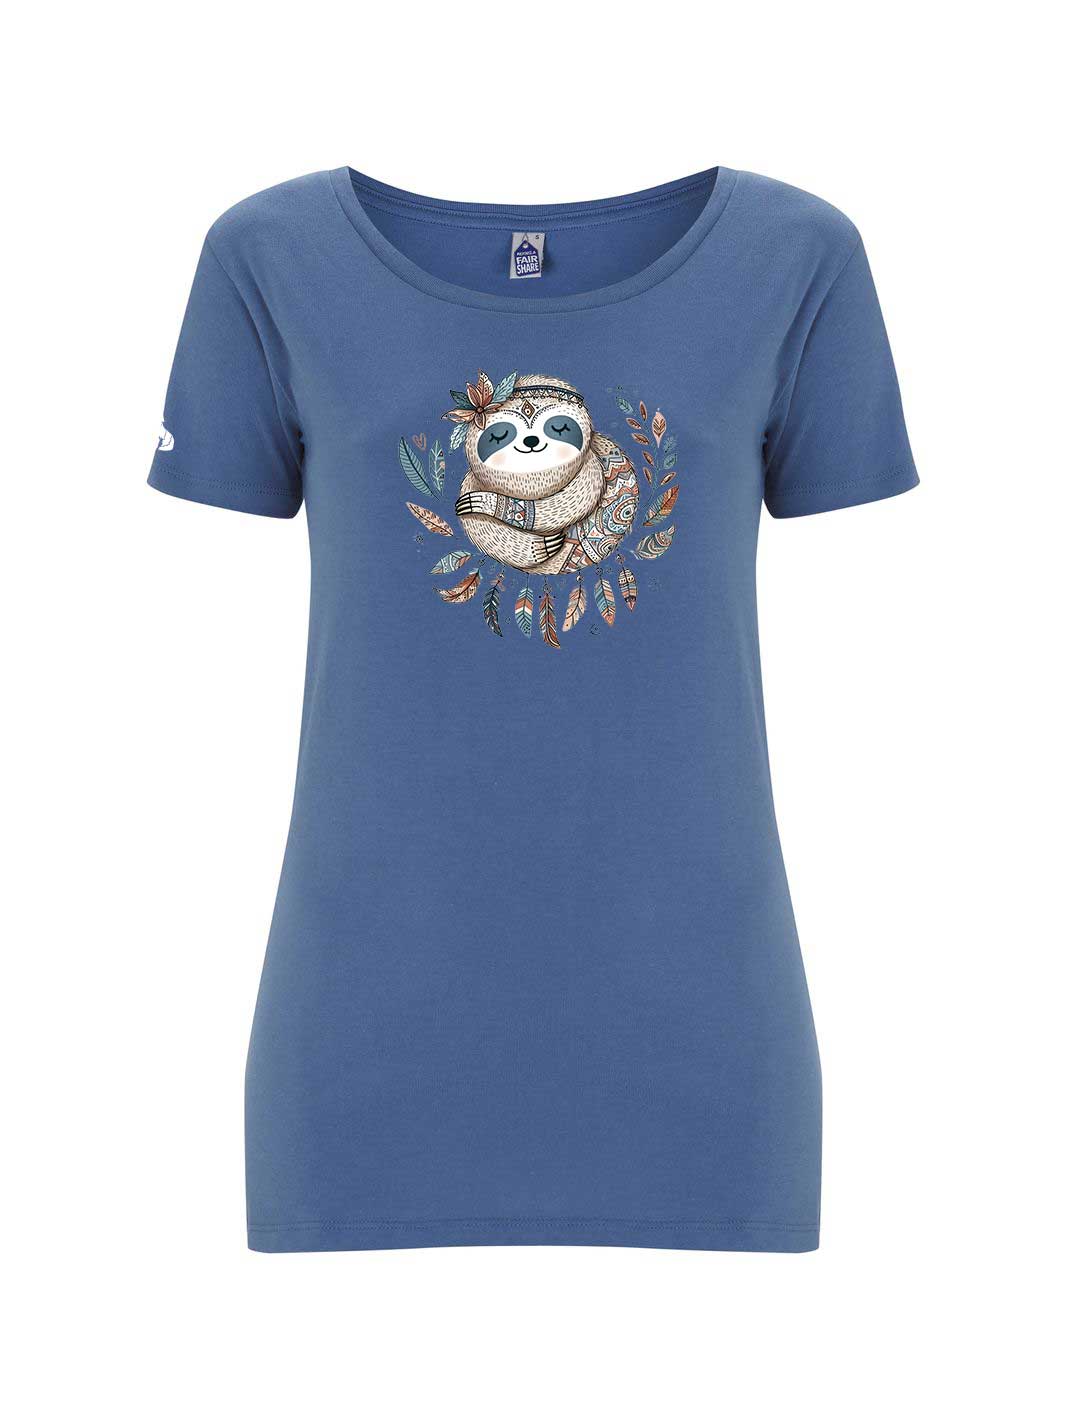 Women's Fairtrade Boho Sloth T-shirt